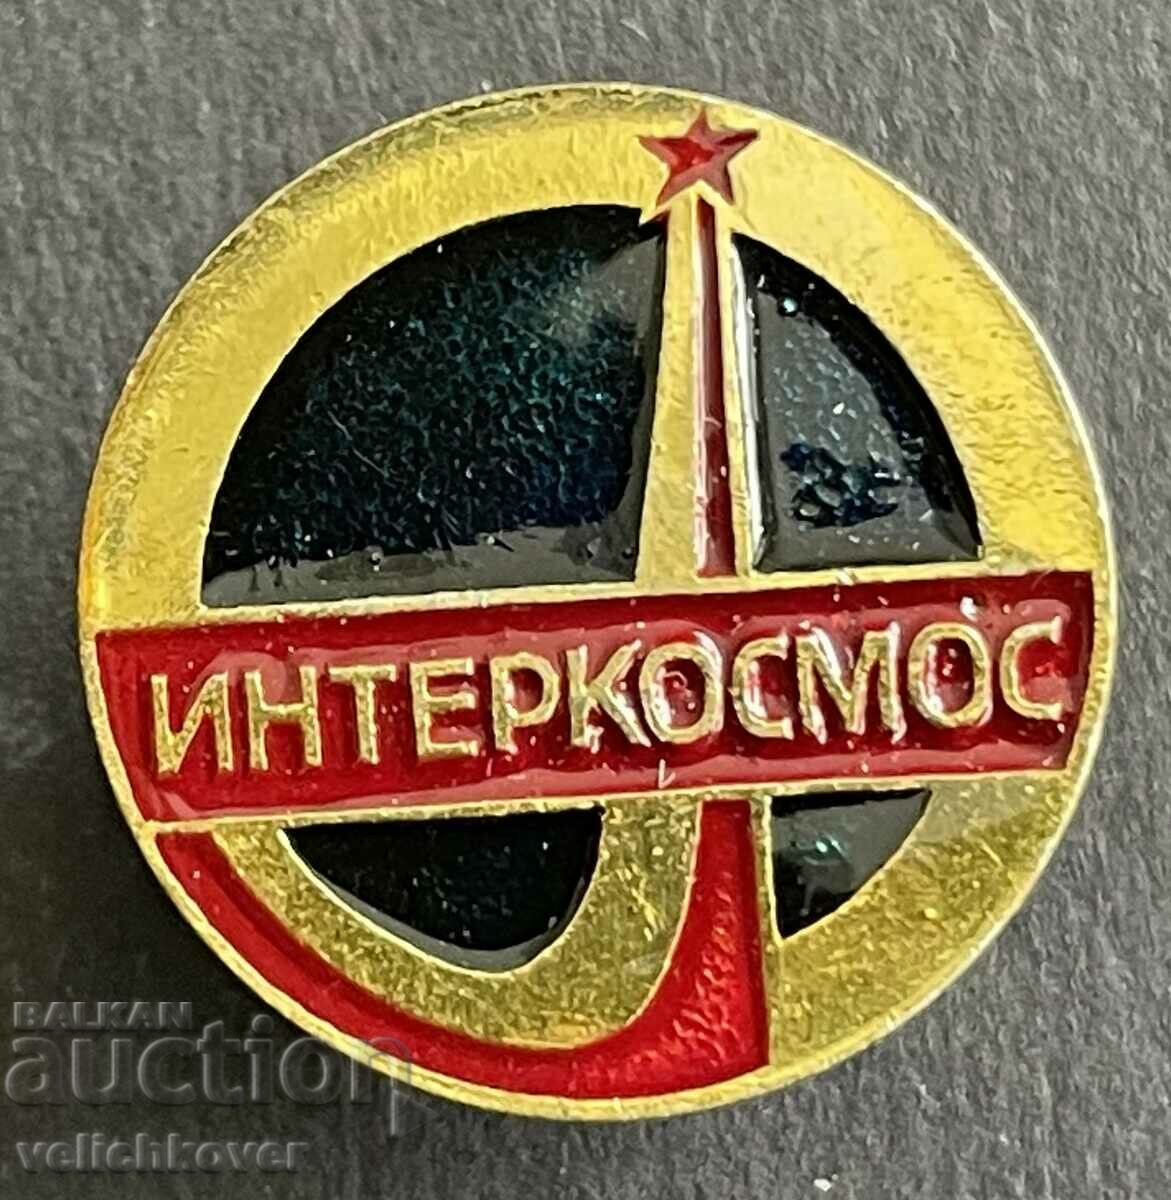 37659 България косчмически знак програма Интеркосмос